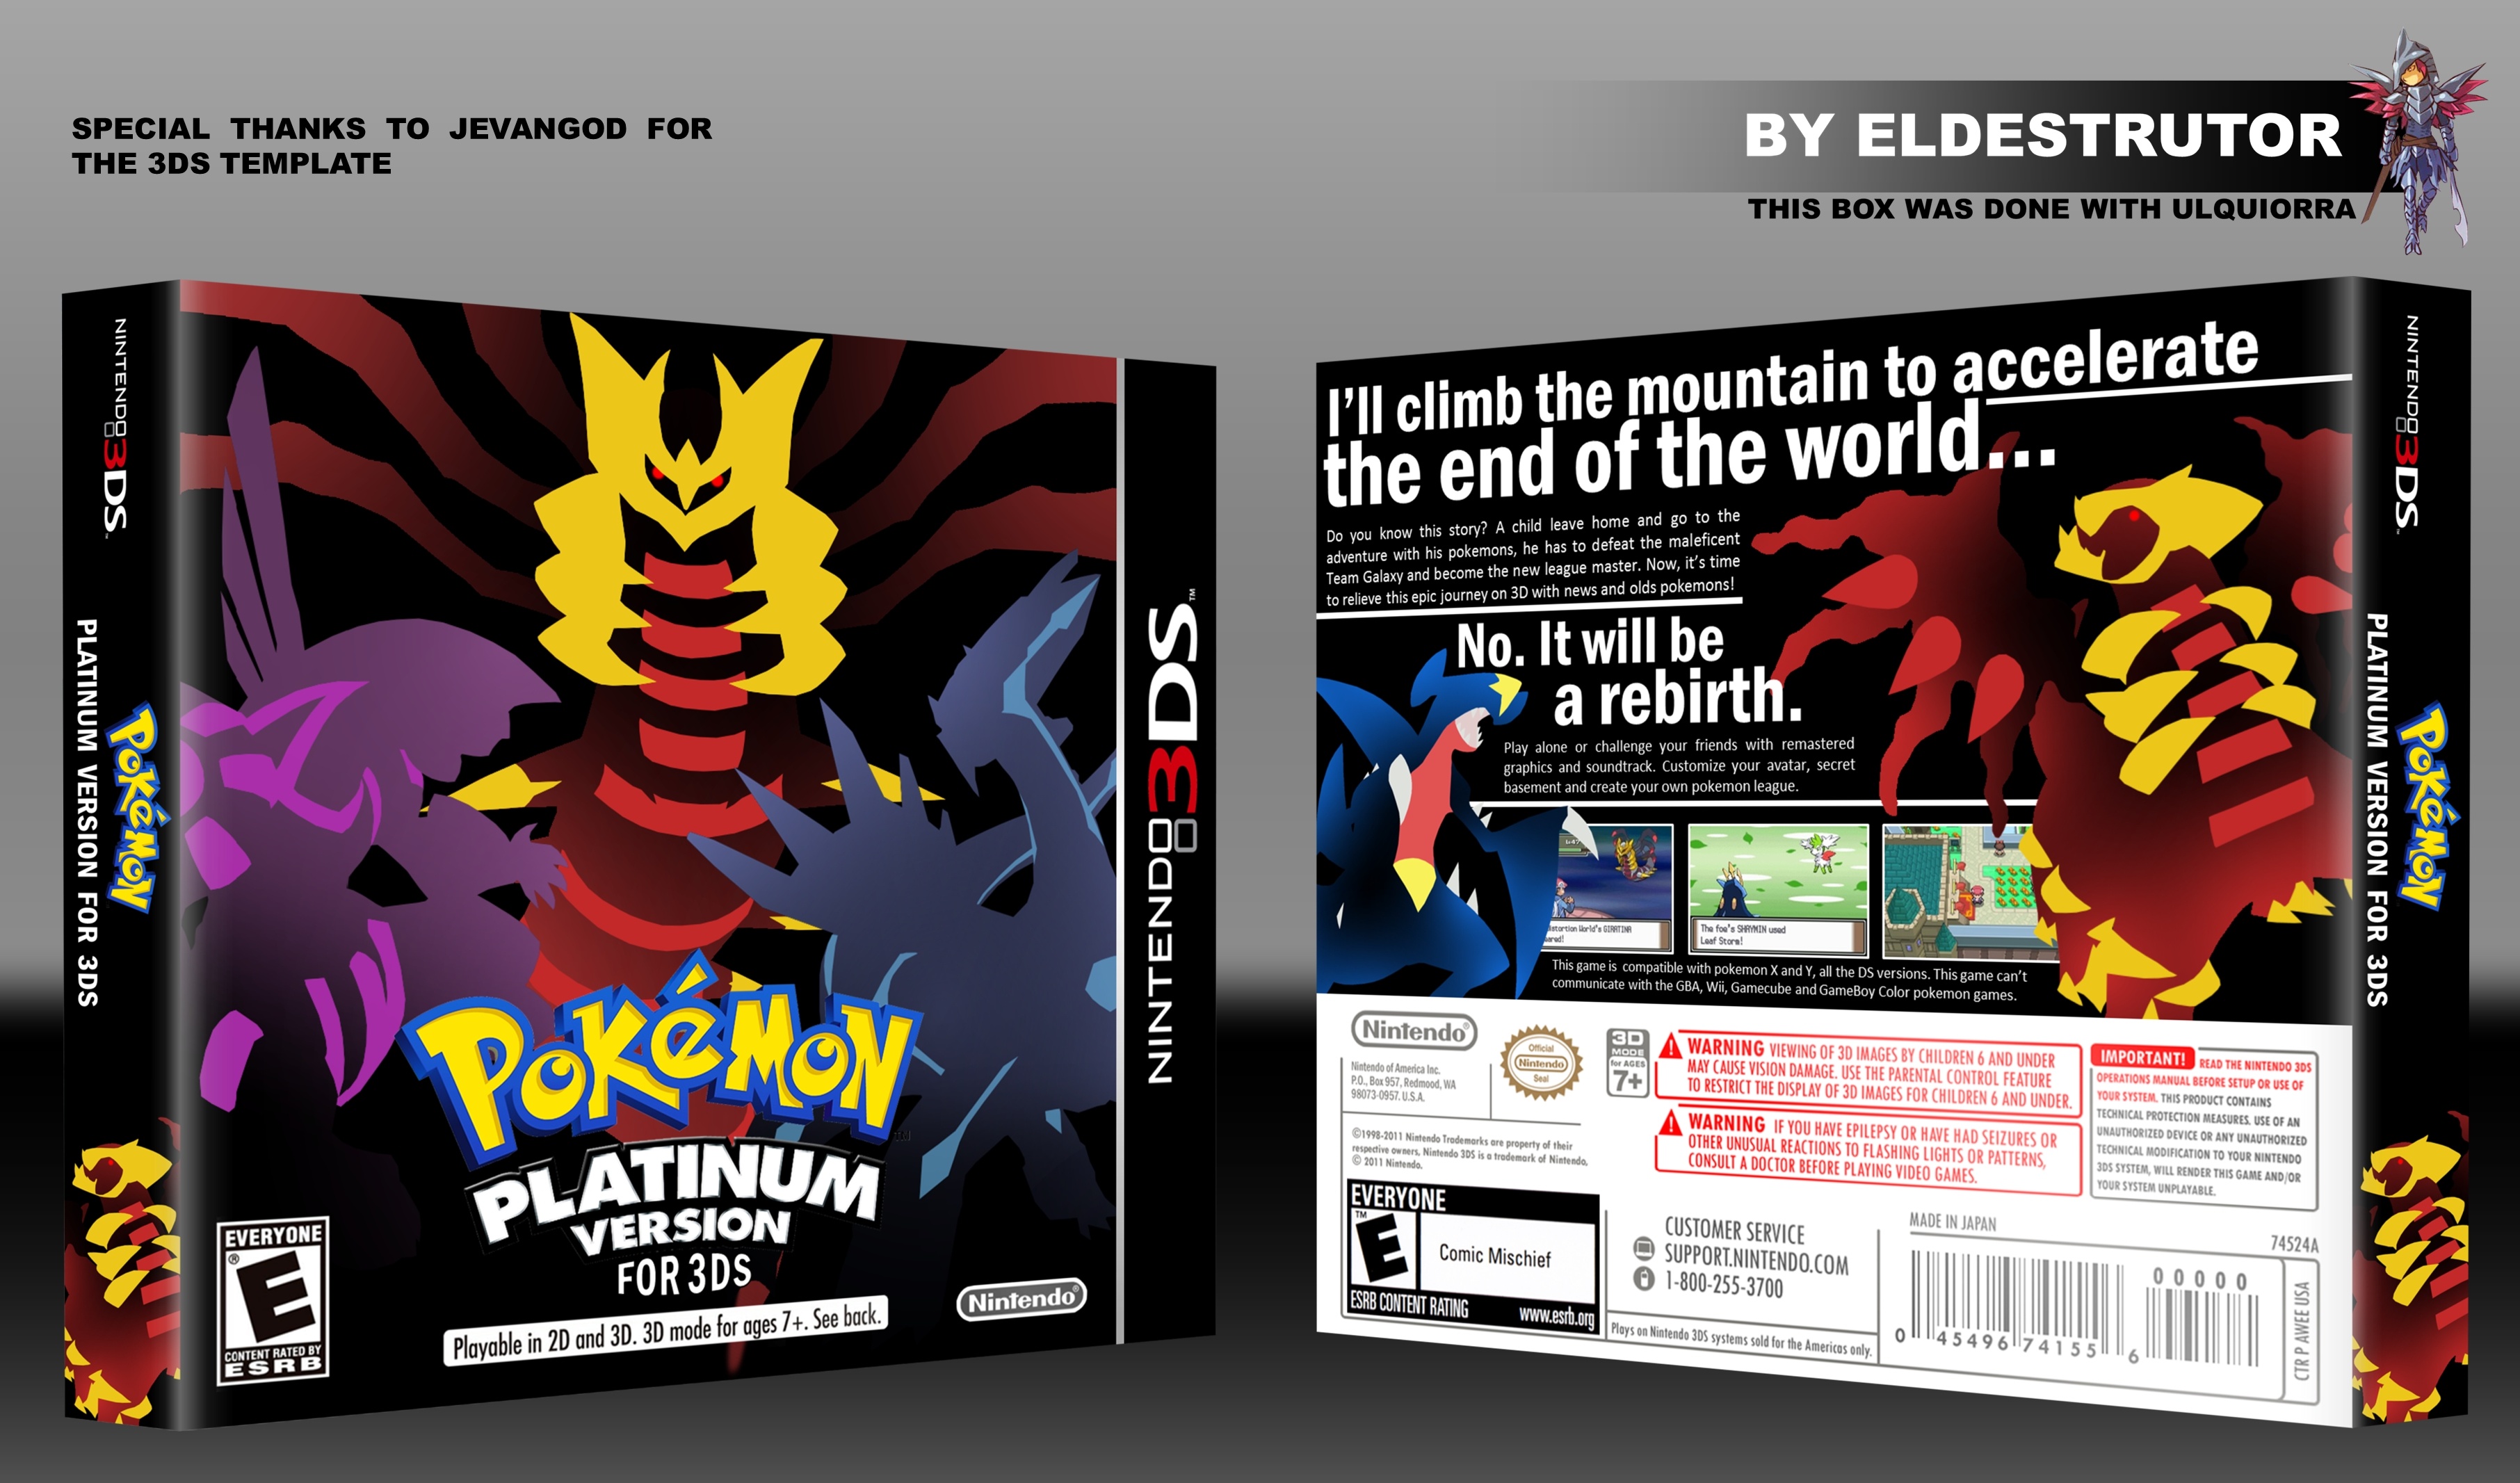 Pokemon Platinum version for 3DS box cover